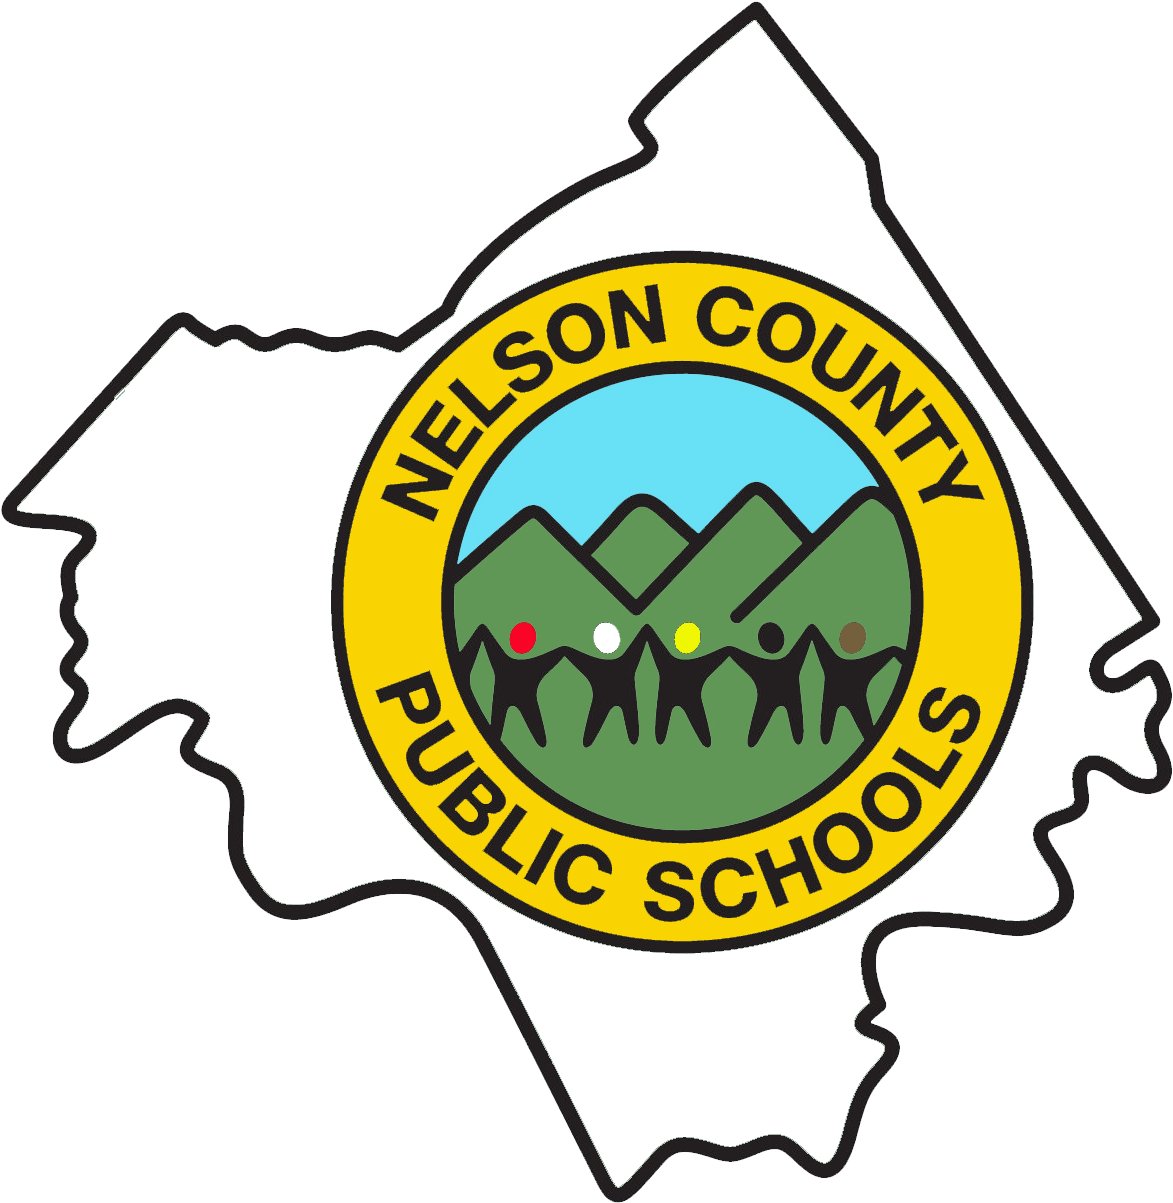 Nelson County Public Schools - Clayton County Public Schools (1200x1217)